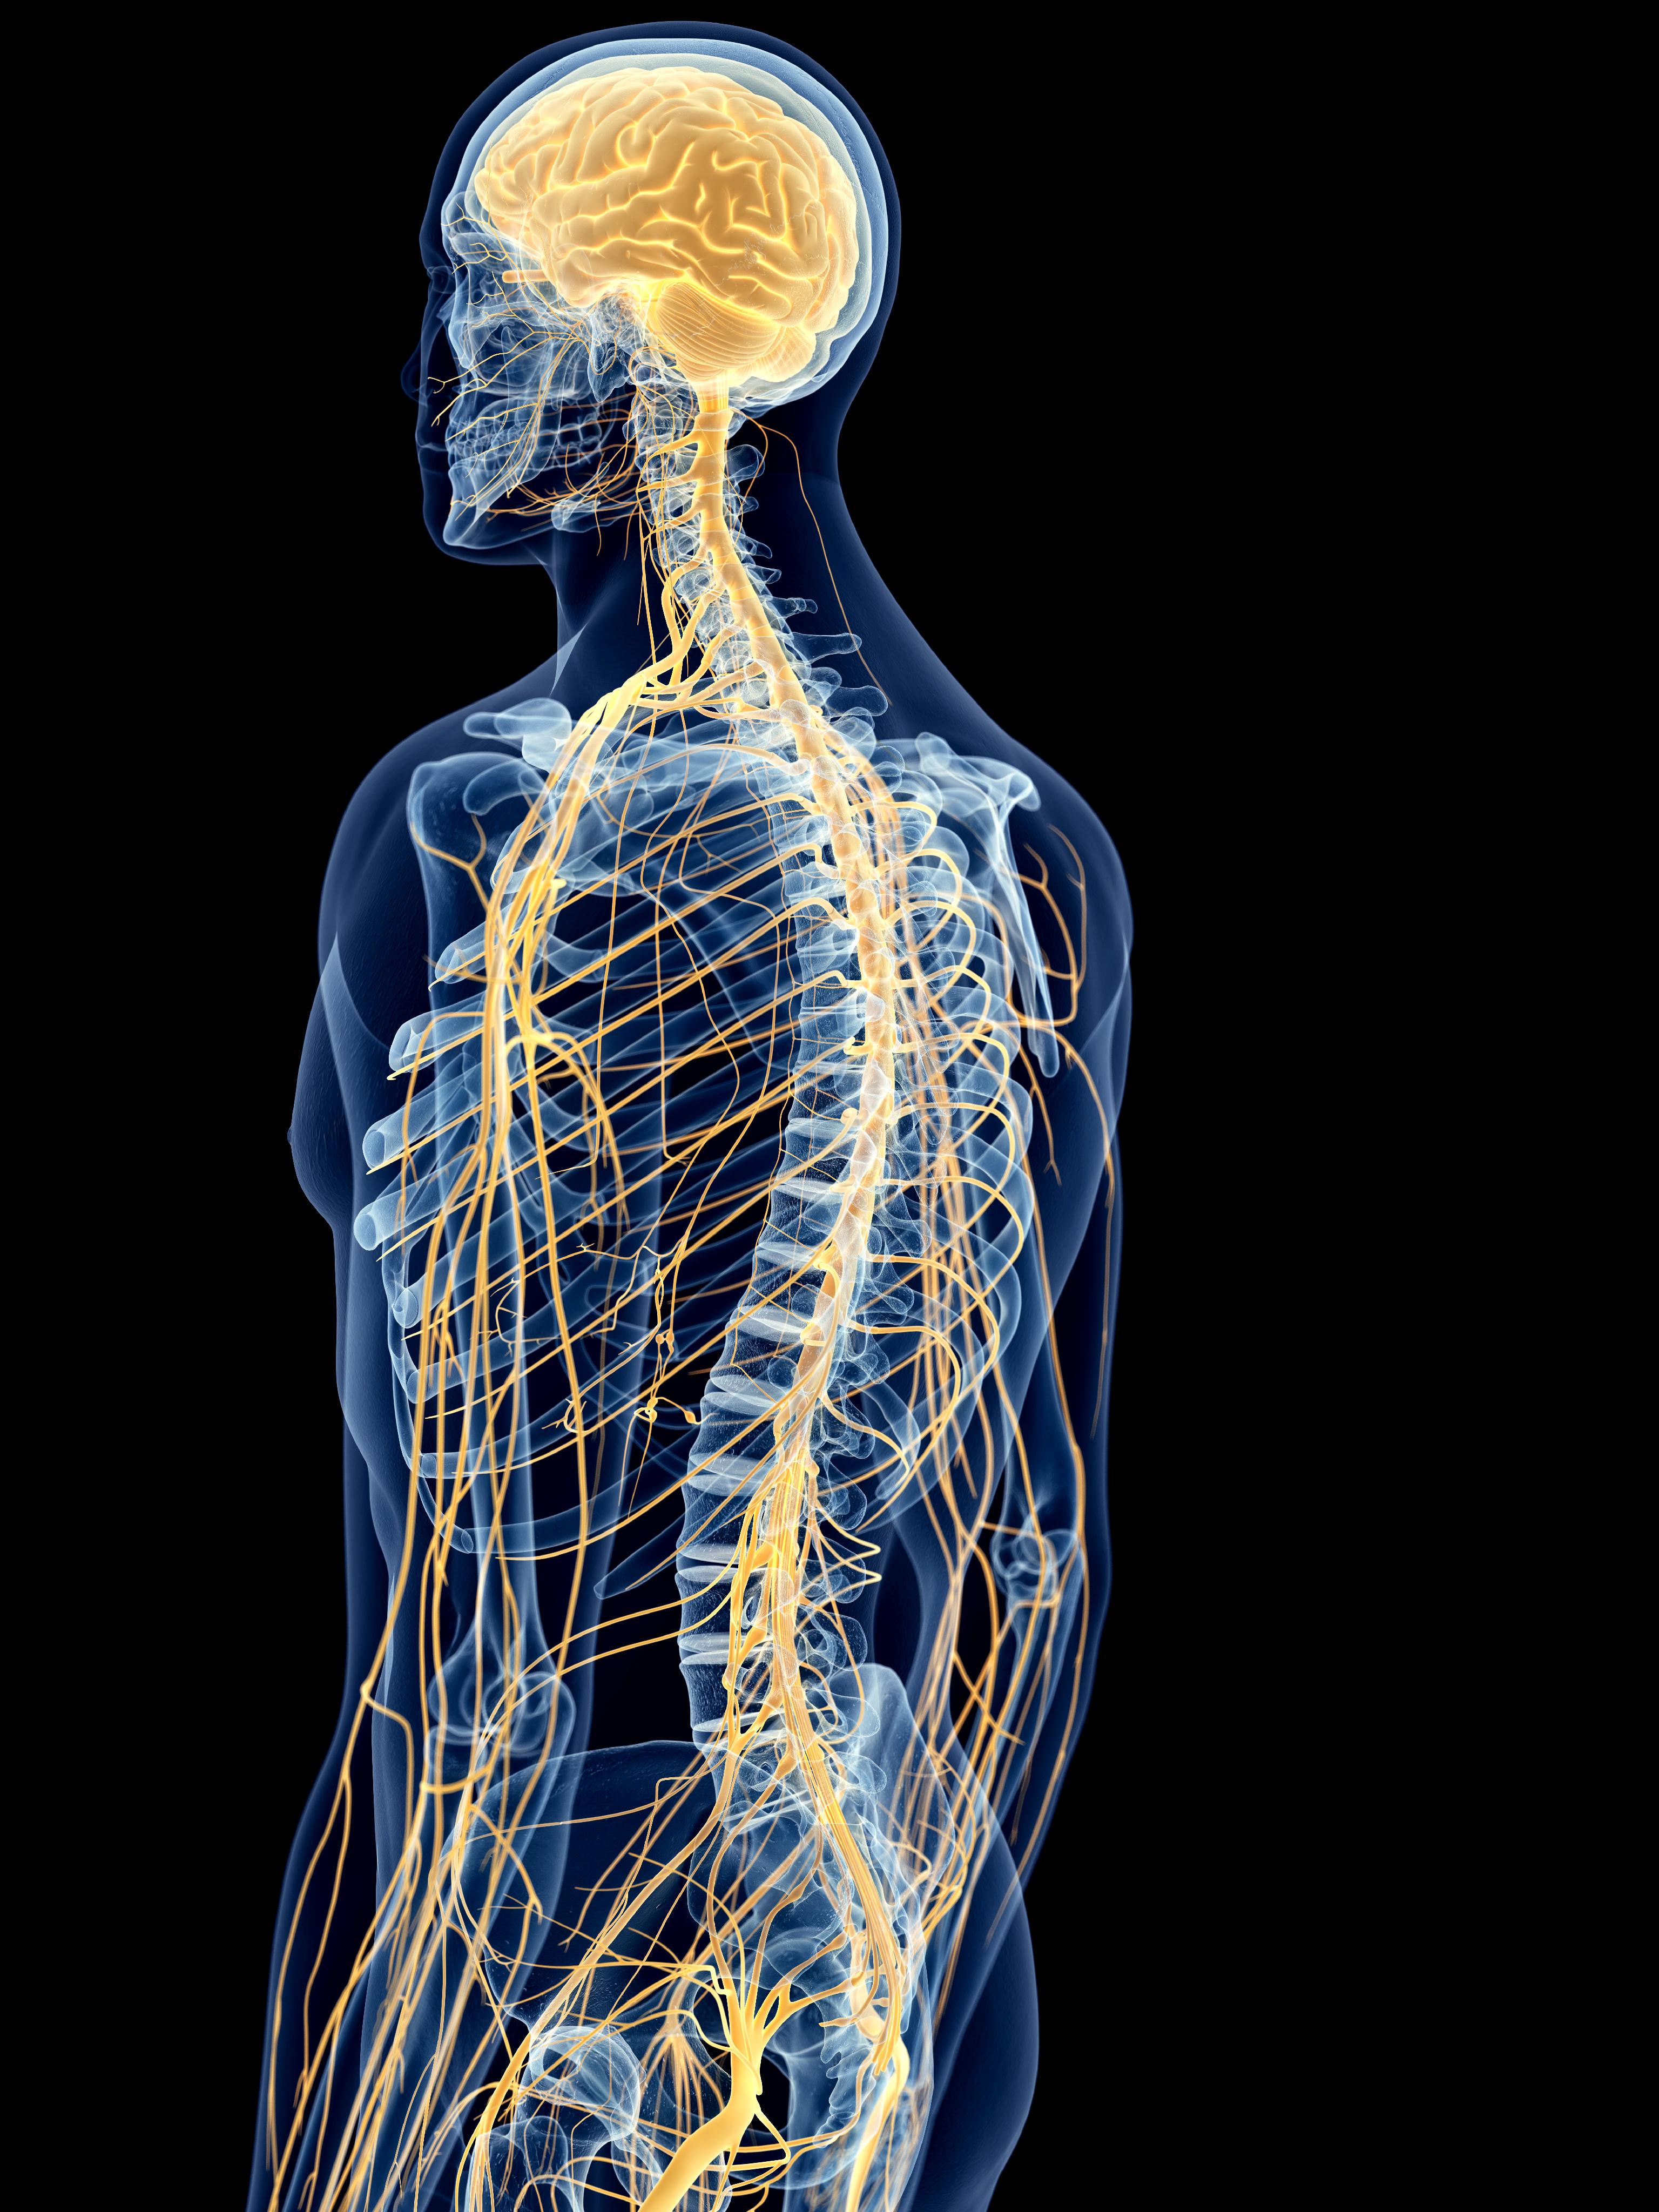 Spinal brain. Нервная система. Нервная система человека. Мозг и нервная система. Нервная система позвоночника человека.